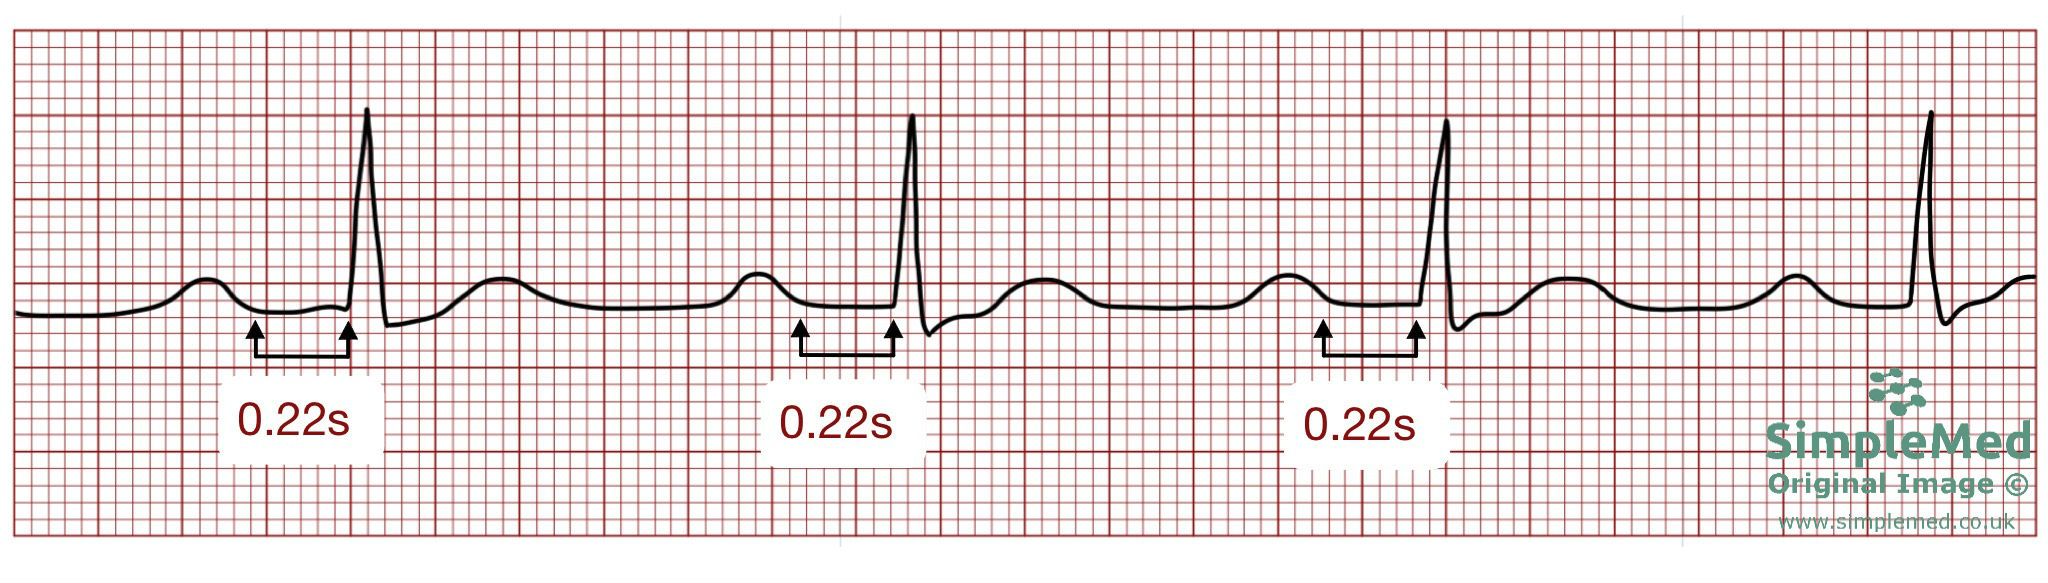 First degree heart block ECG SimpleMed